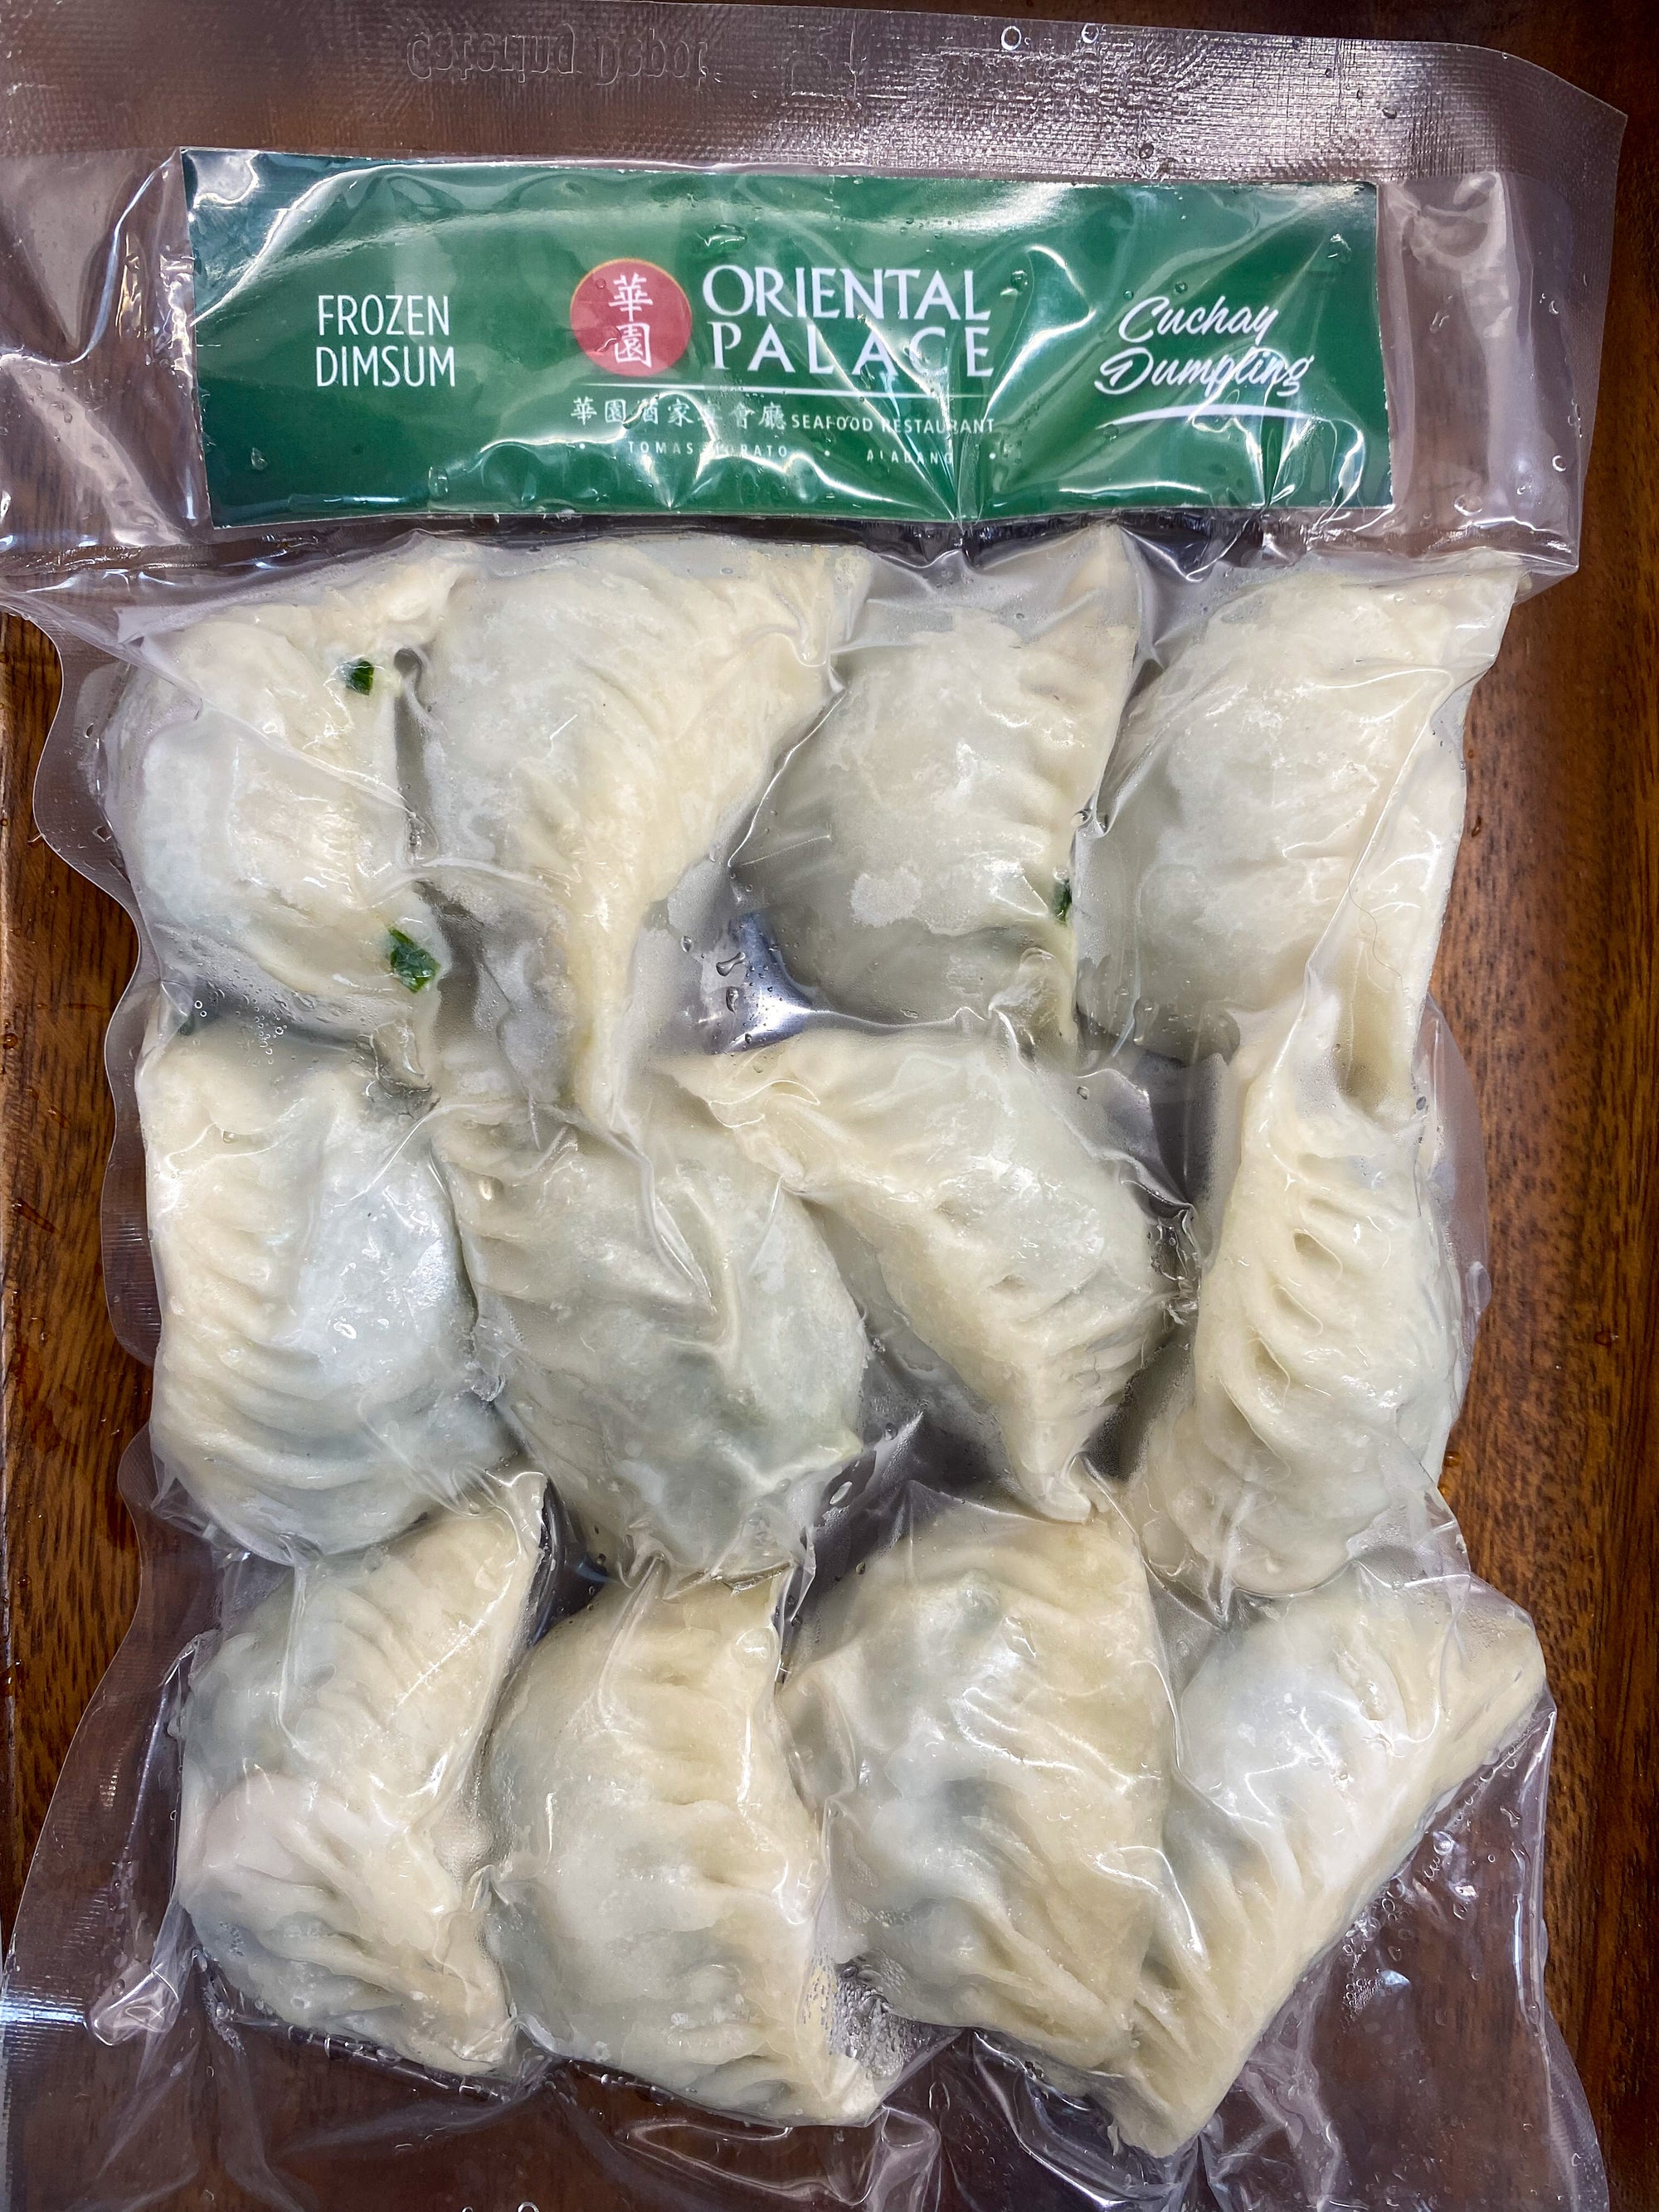 Oriental Palace Cuchay Dumpling